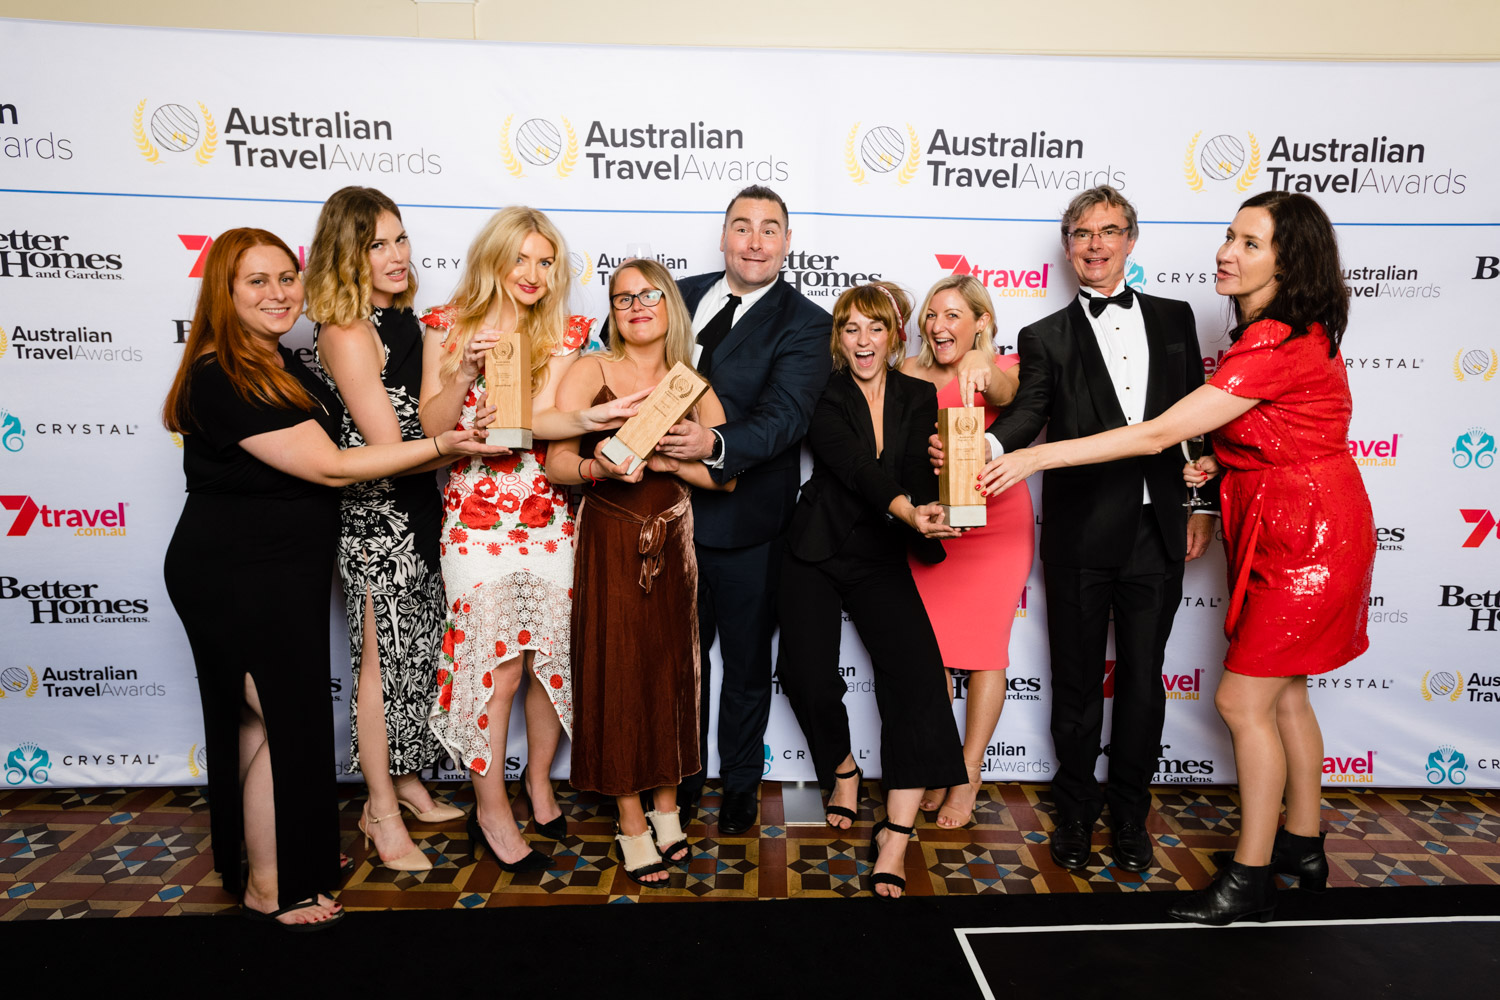 australian tourism awards portal